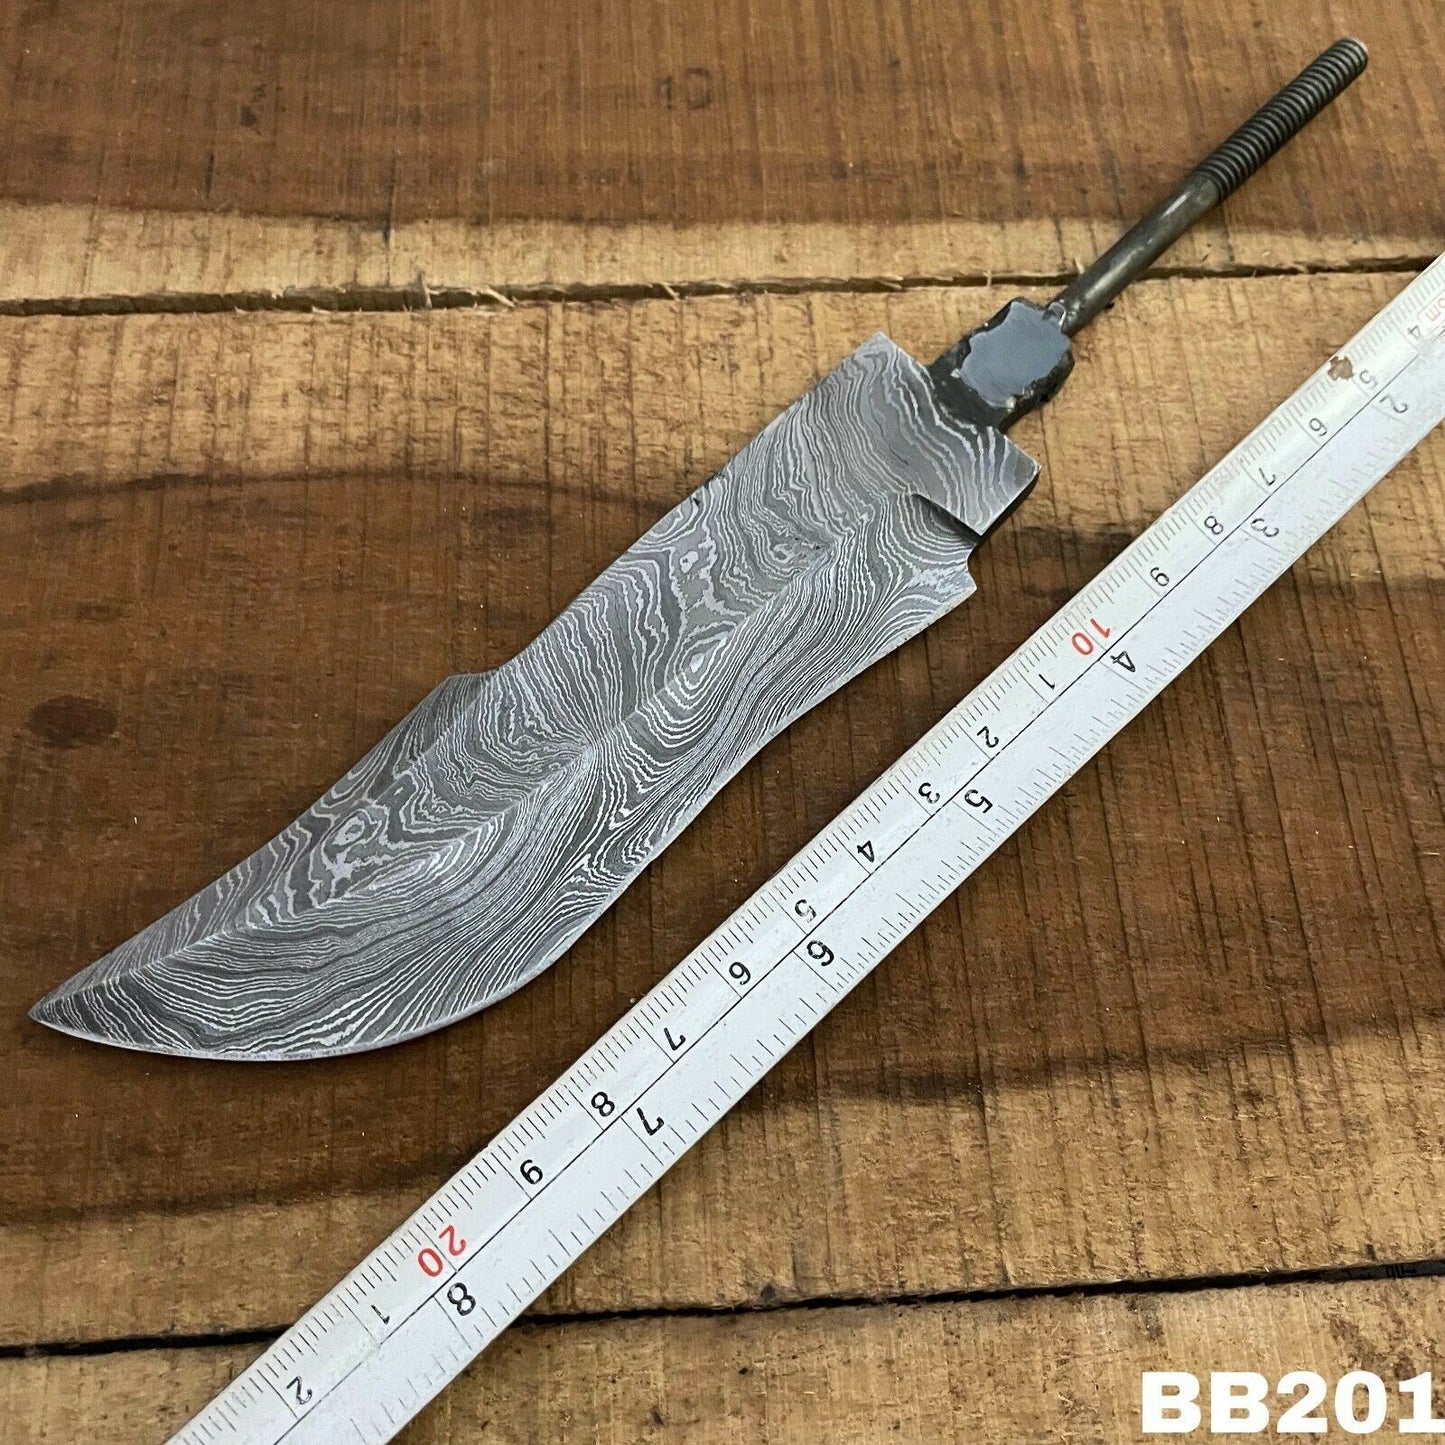 SHARDBLADE Custom Hand Forged Damascus Steel Hunting Rat Tail Blank Blade knife